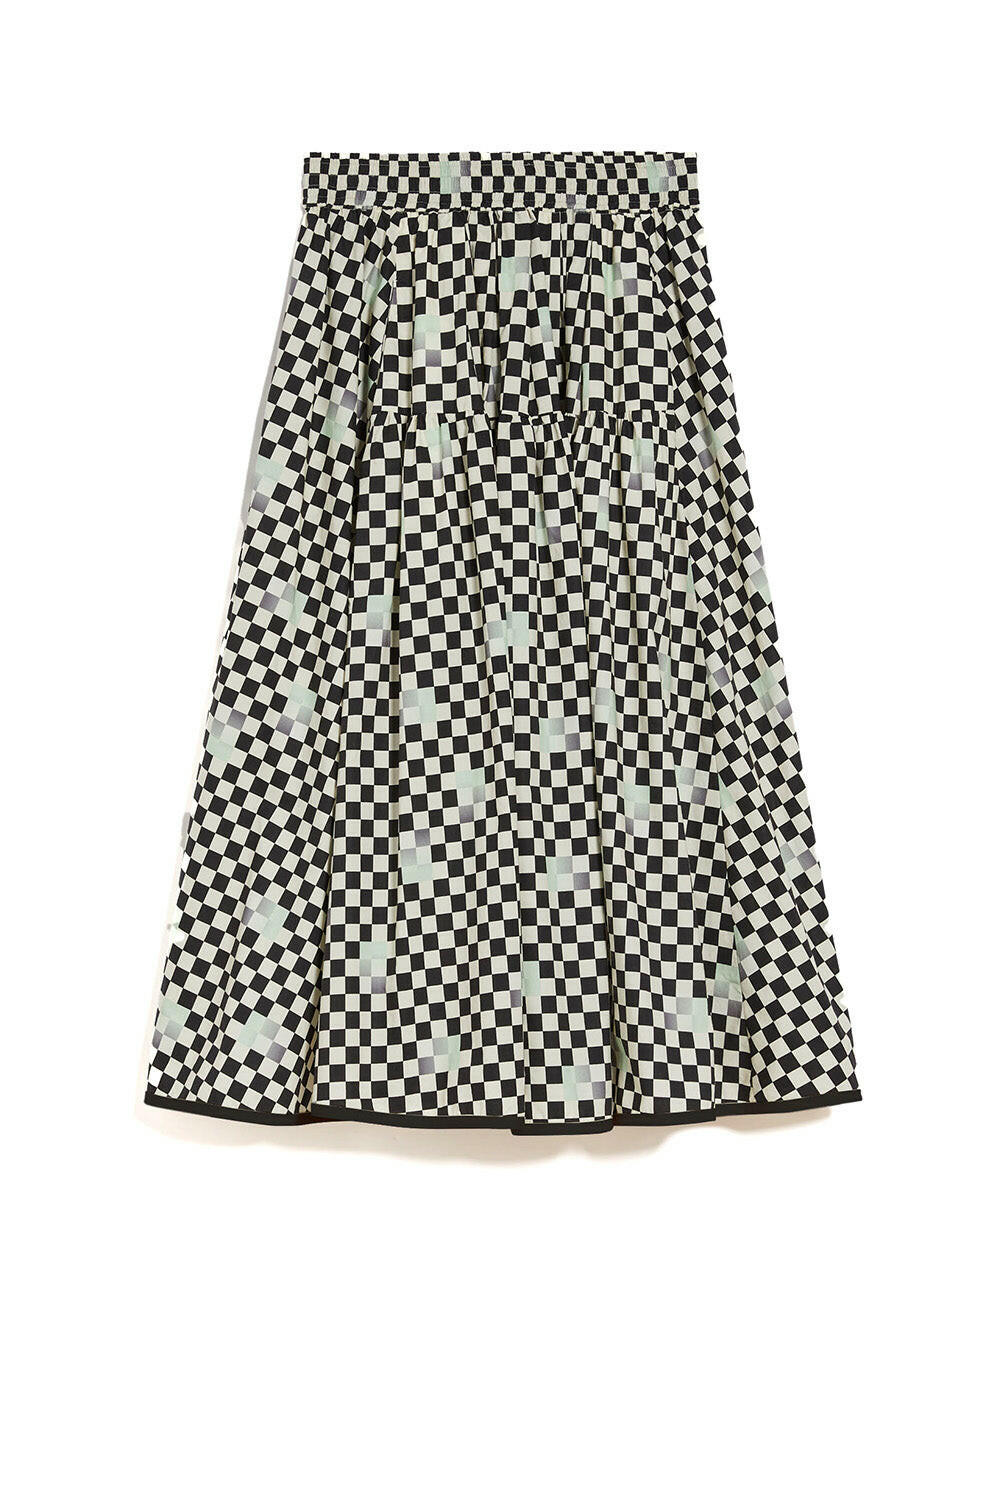  Max Mara Oxide Skirt Donna - 1